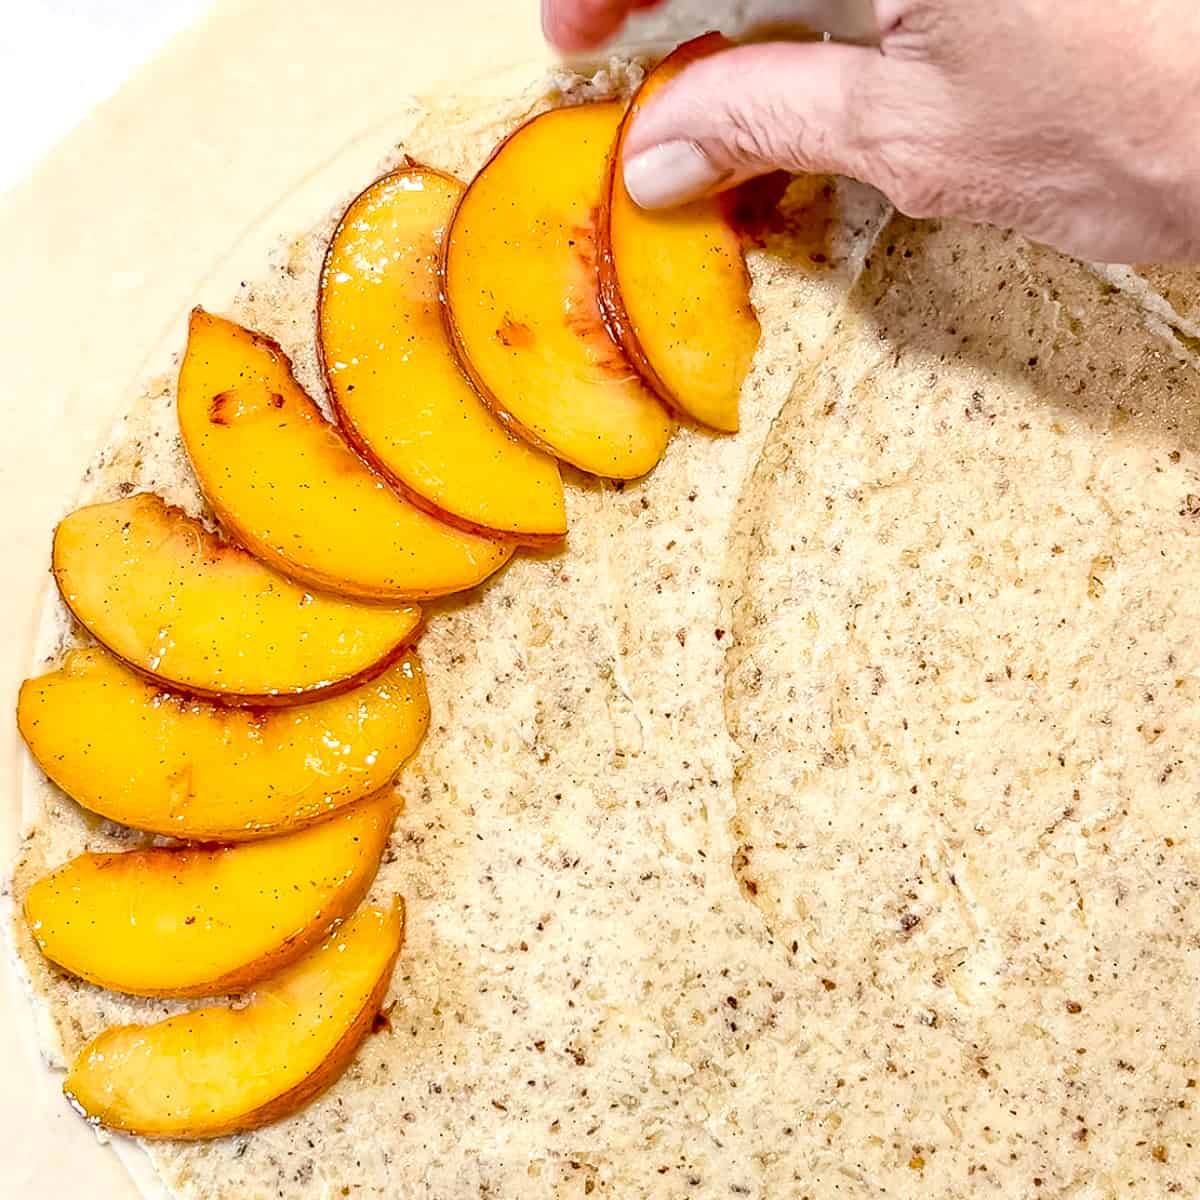 Placing peaches over frangipane.